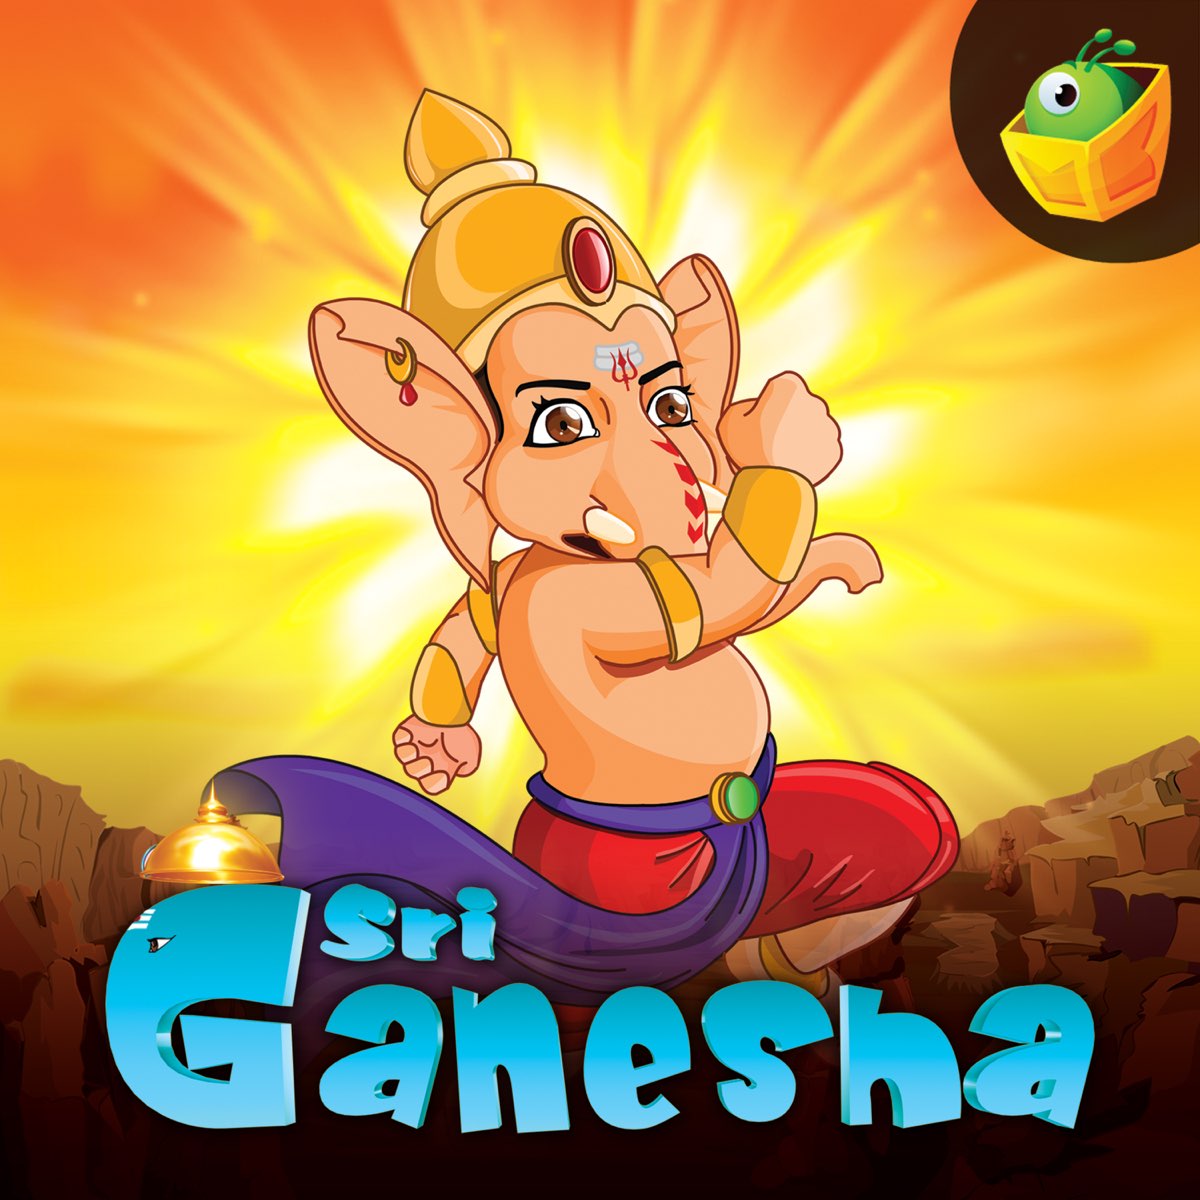 Sri Ganesha by magicbox on Apple Music